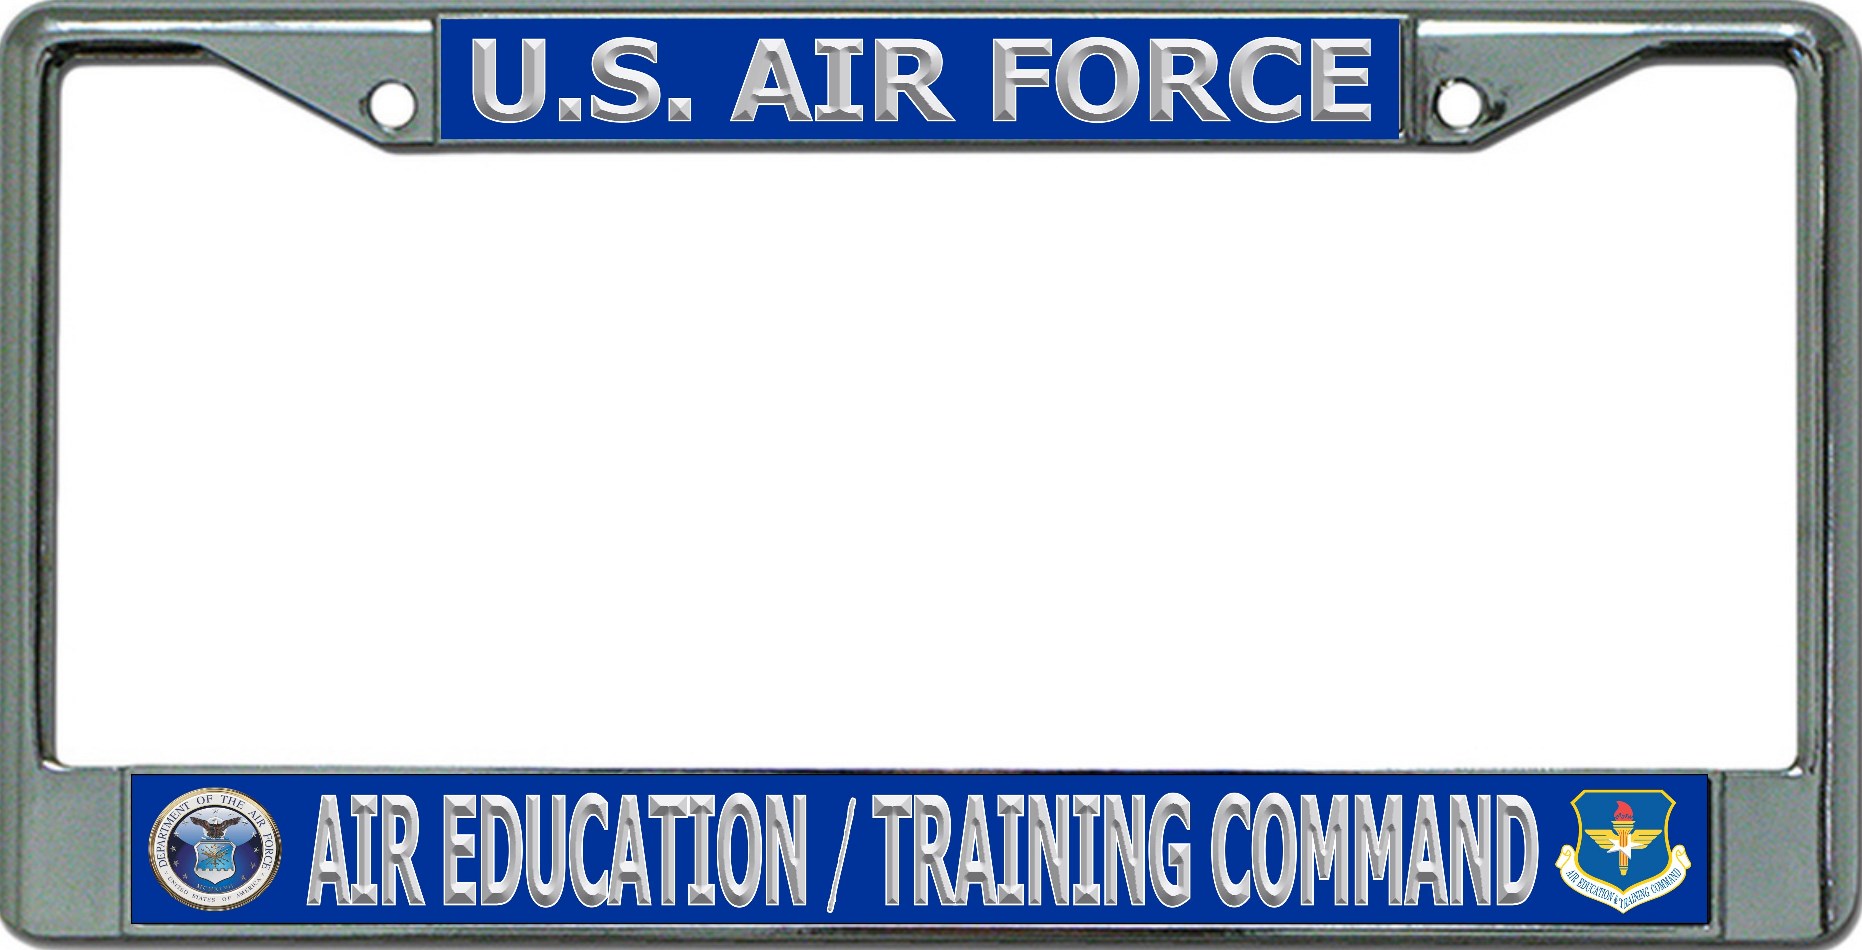 U.S. Air Force Air Education Training Command Chrome License Plate FRAME